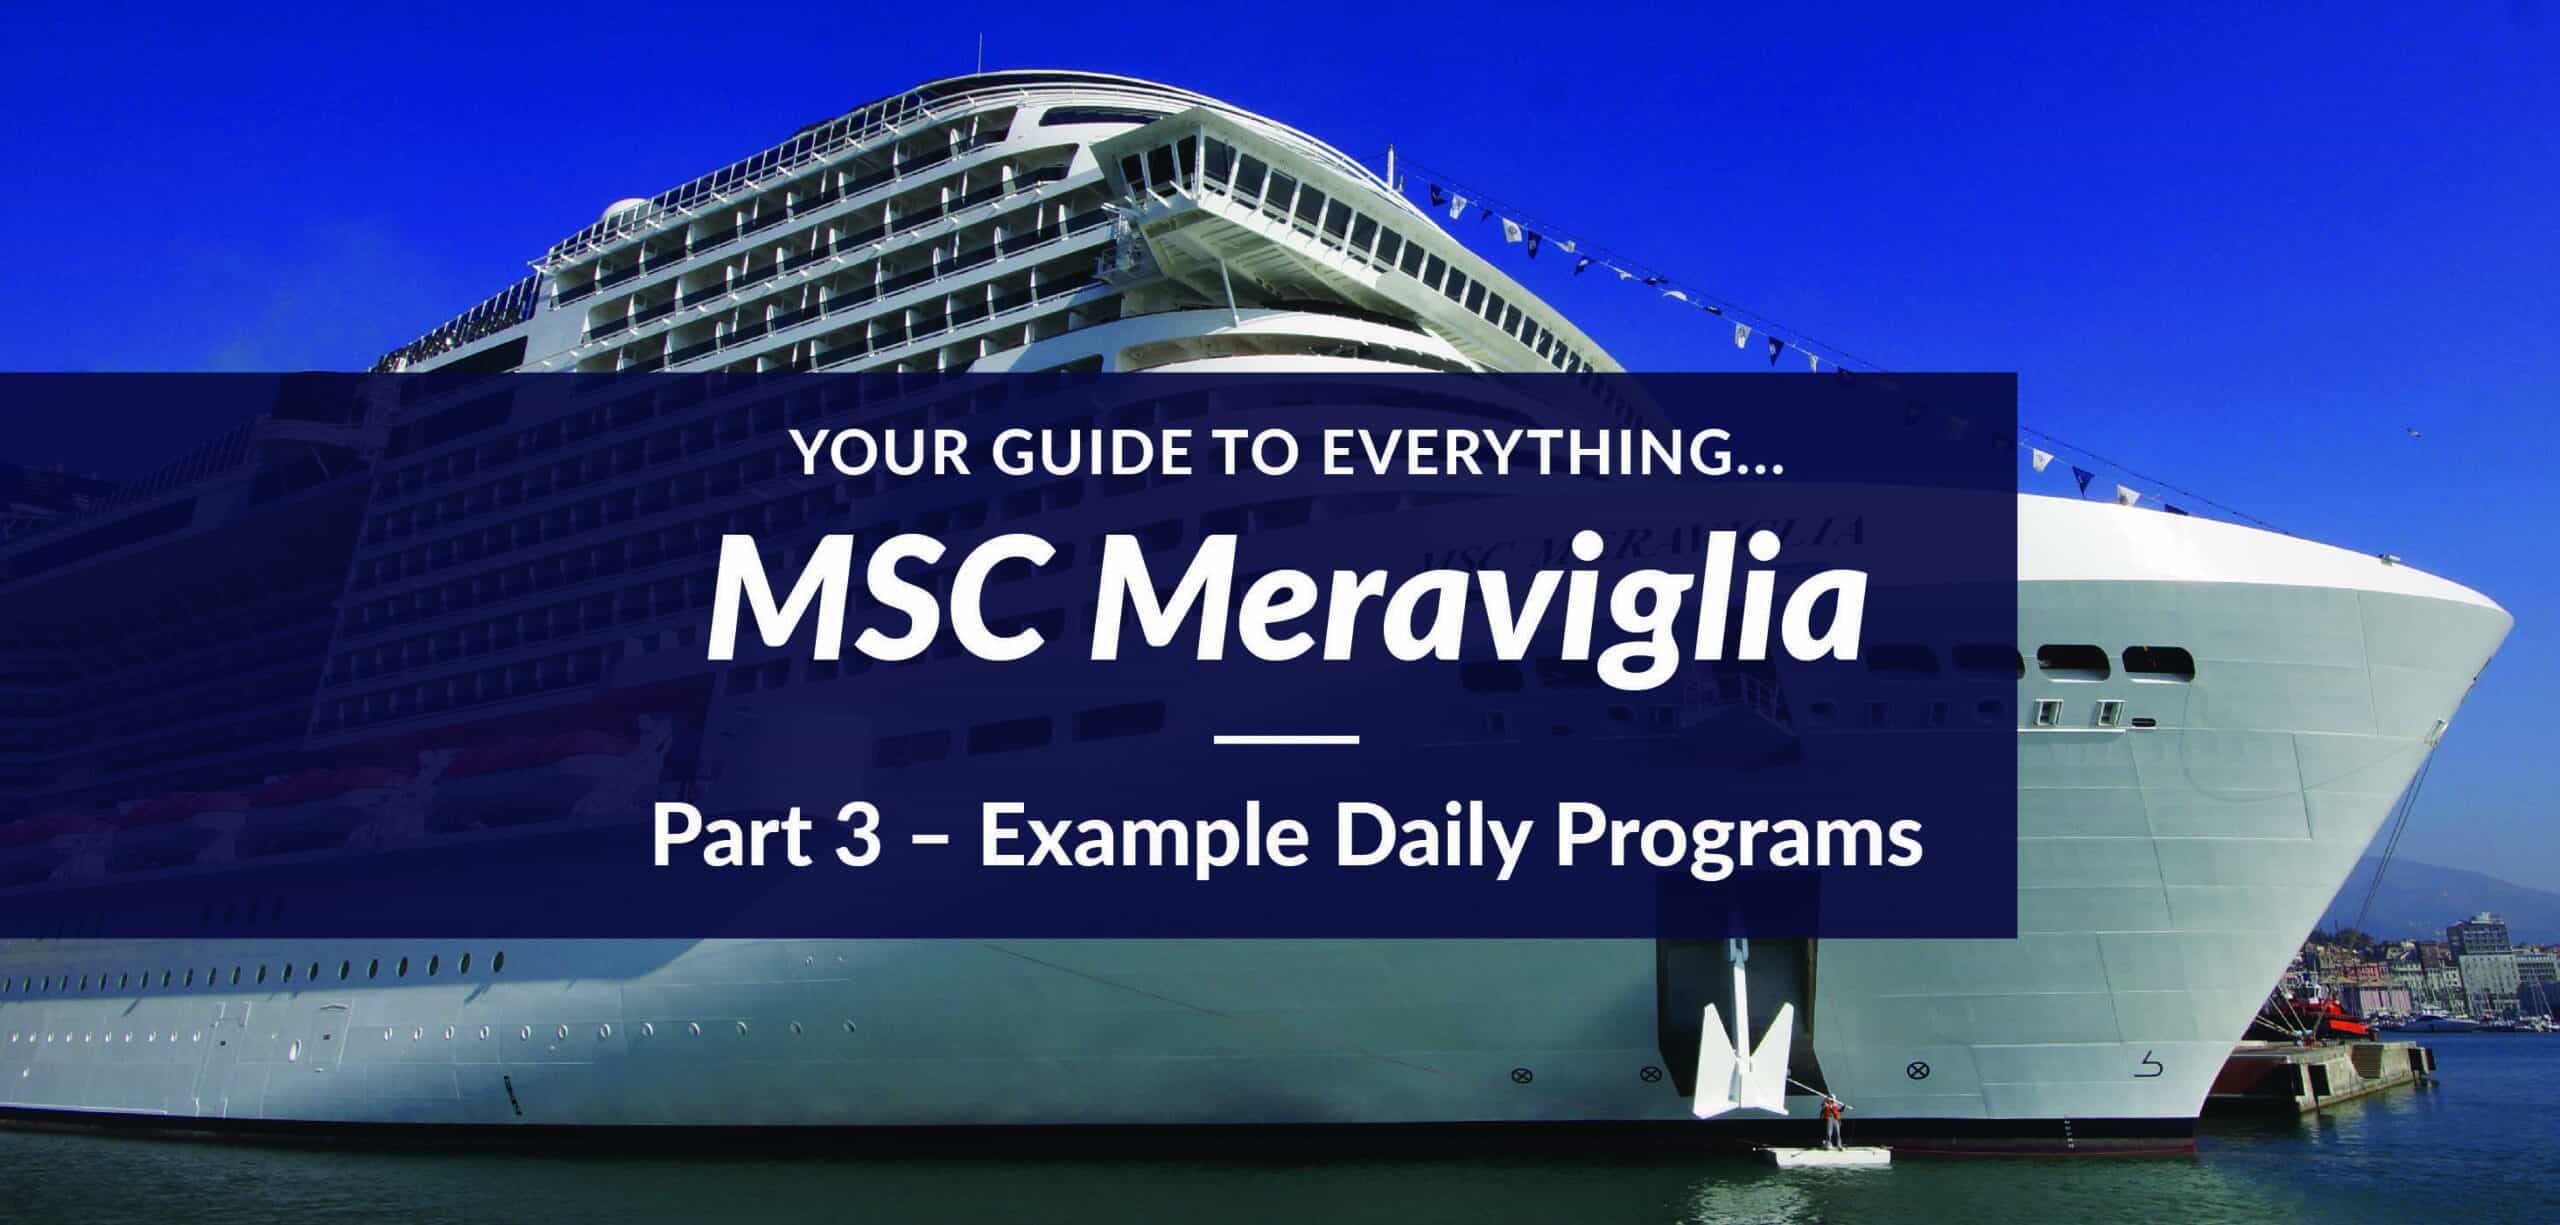 MSC Meraviglia Example Daily Programs